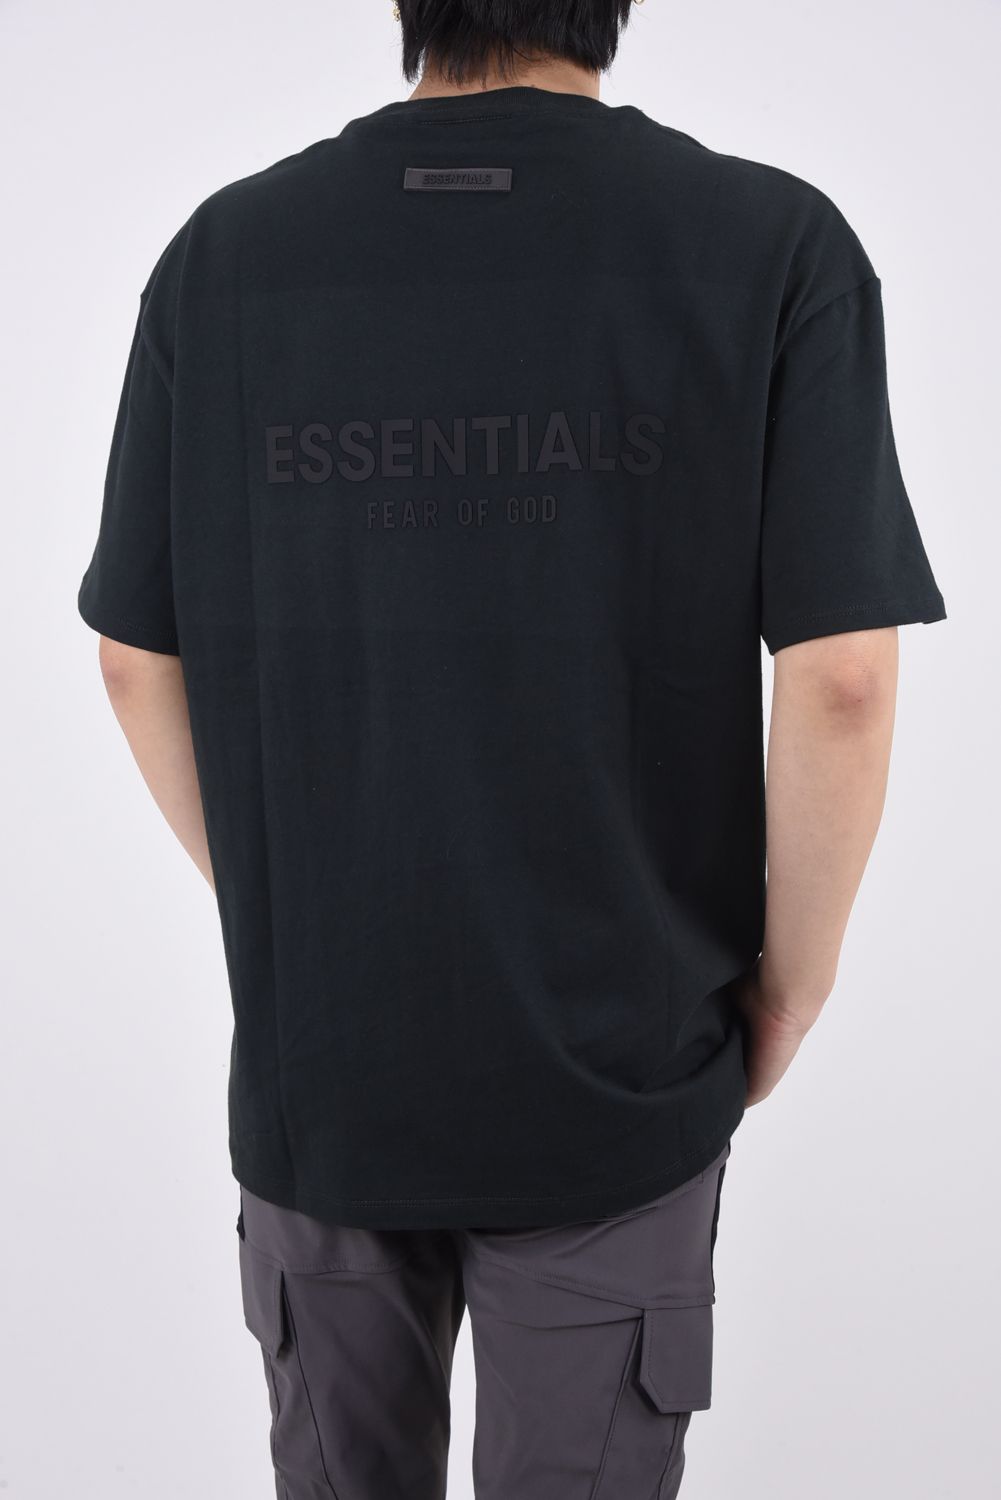 FOG ESSENTIALS - ESSENTIALS BACK LOGO T-Shirt / バック ロゴ ...